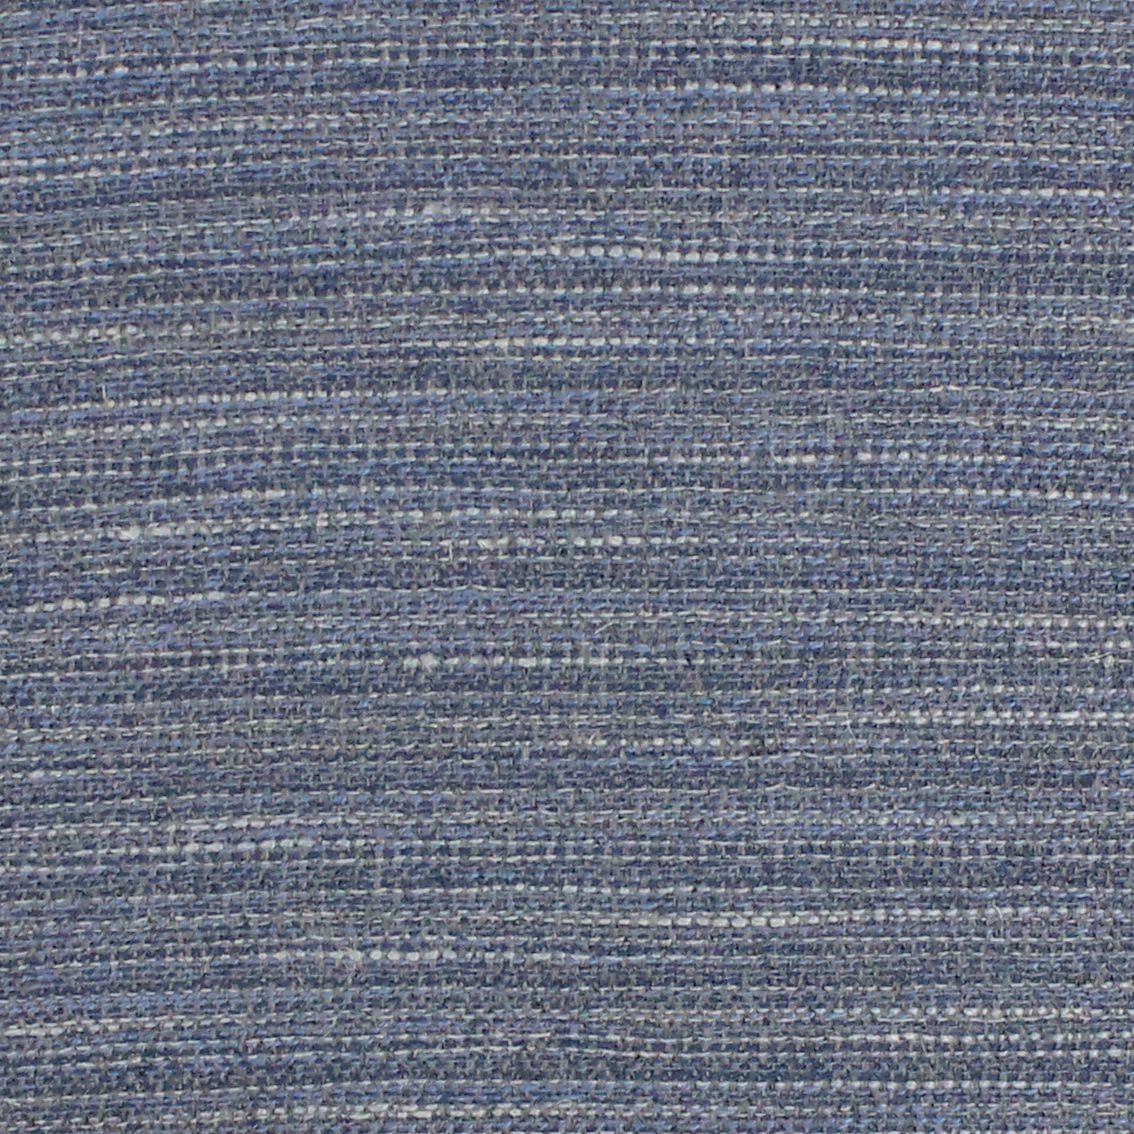 McAlister Textiles Hamleton Navy Blue Textured Plain Roman Blinds Roman Blinds 